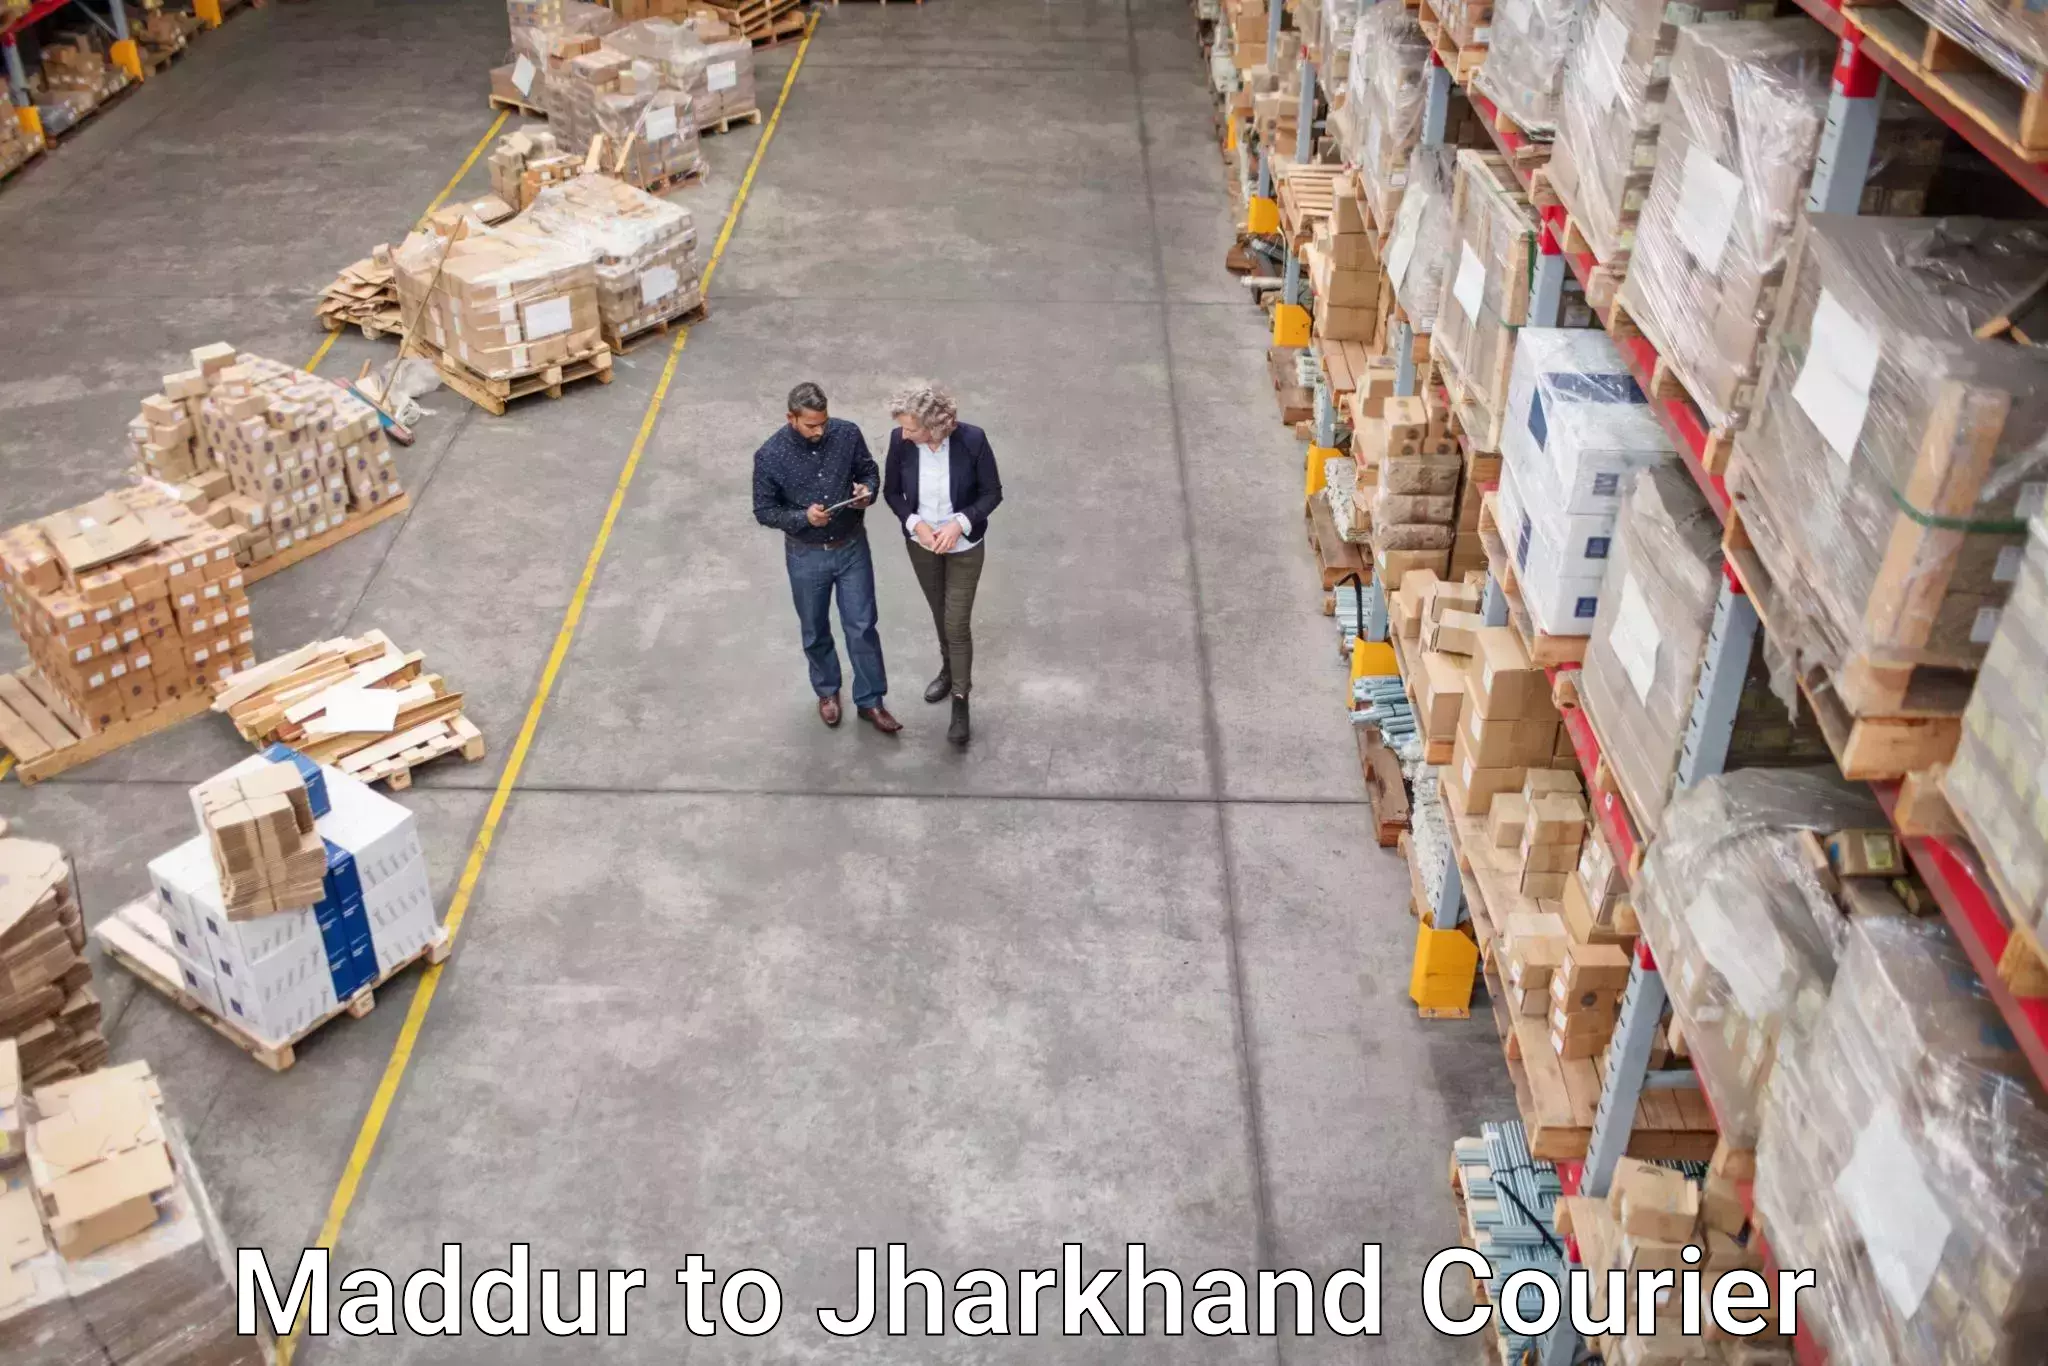 Courier service comparison Maddur to Mahagama